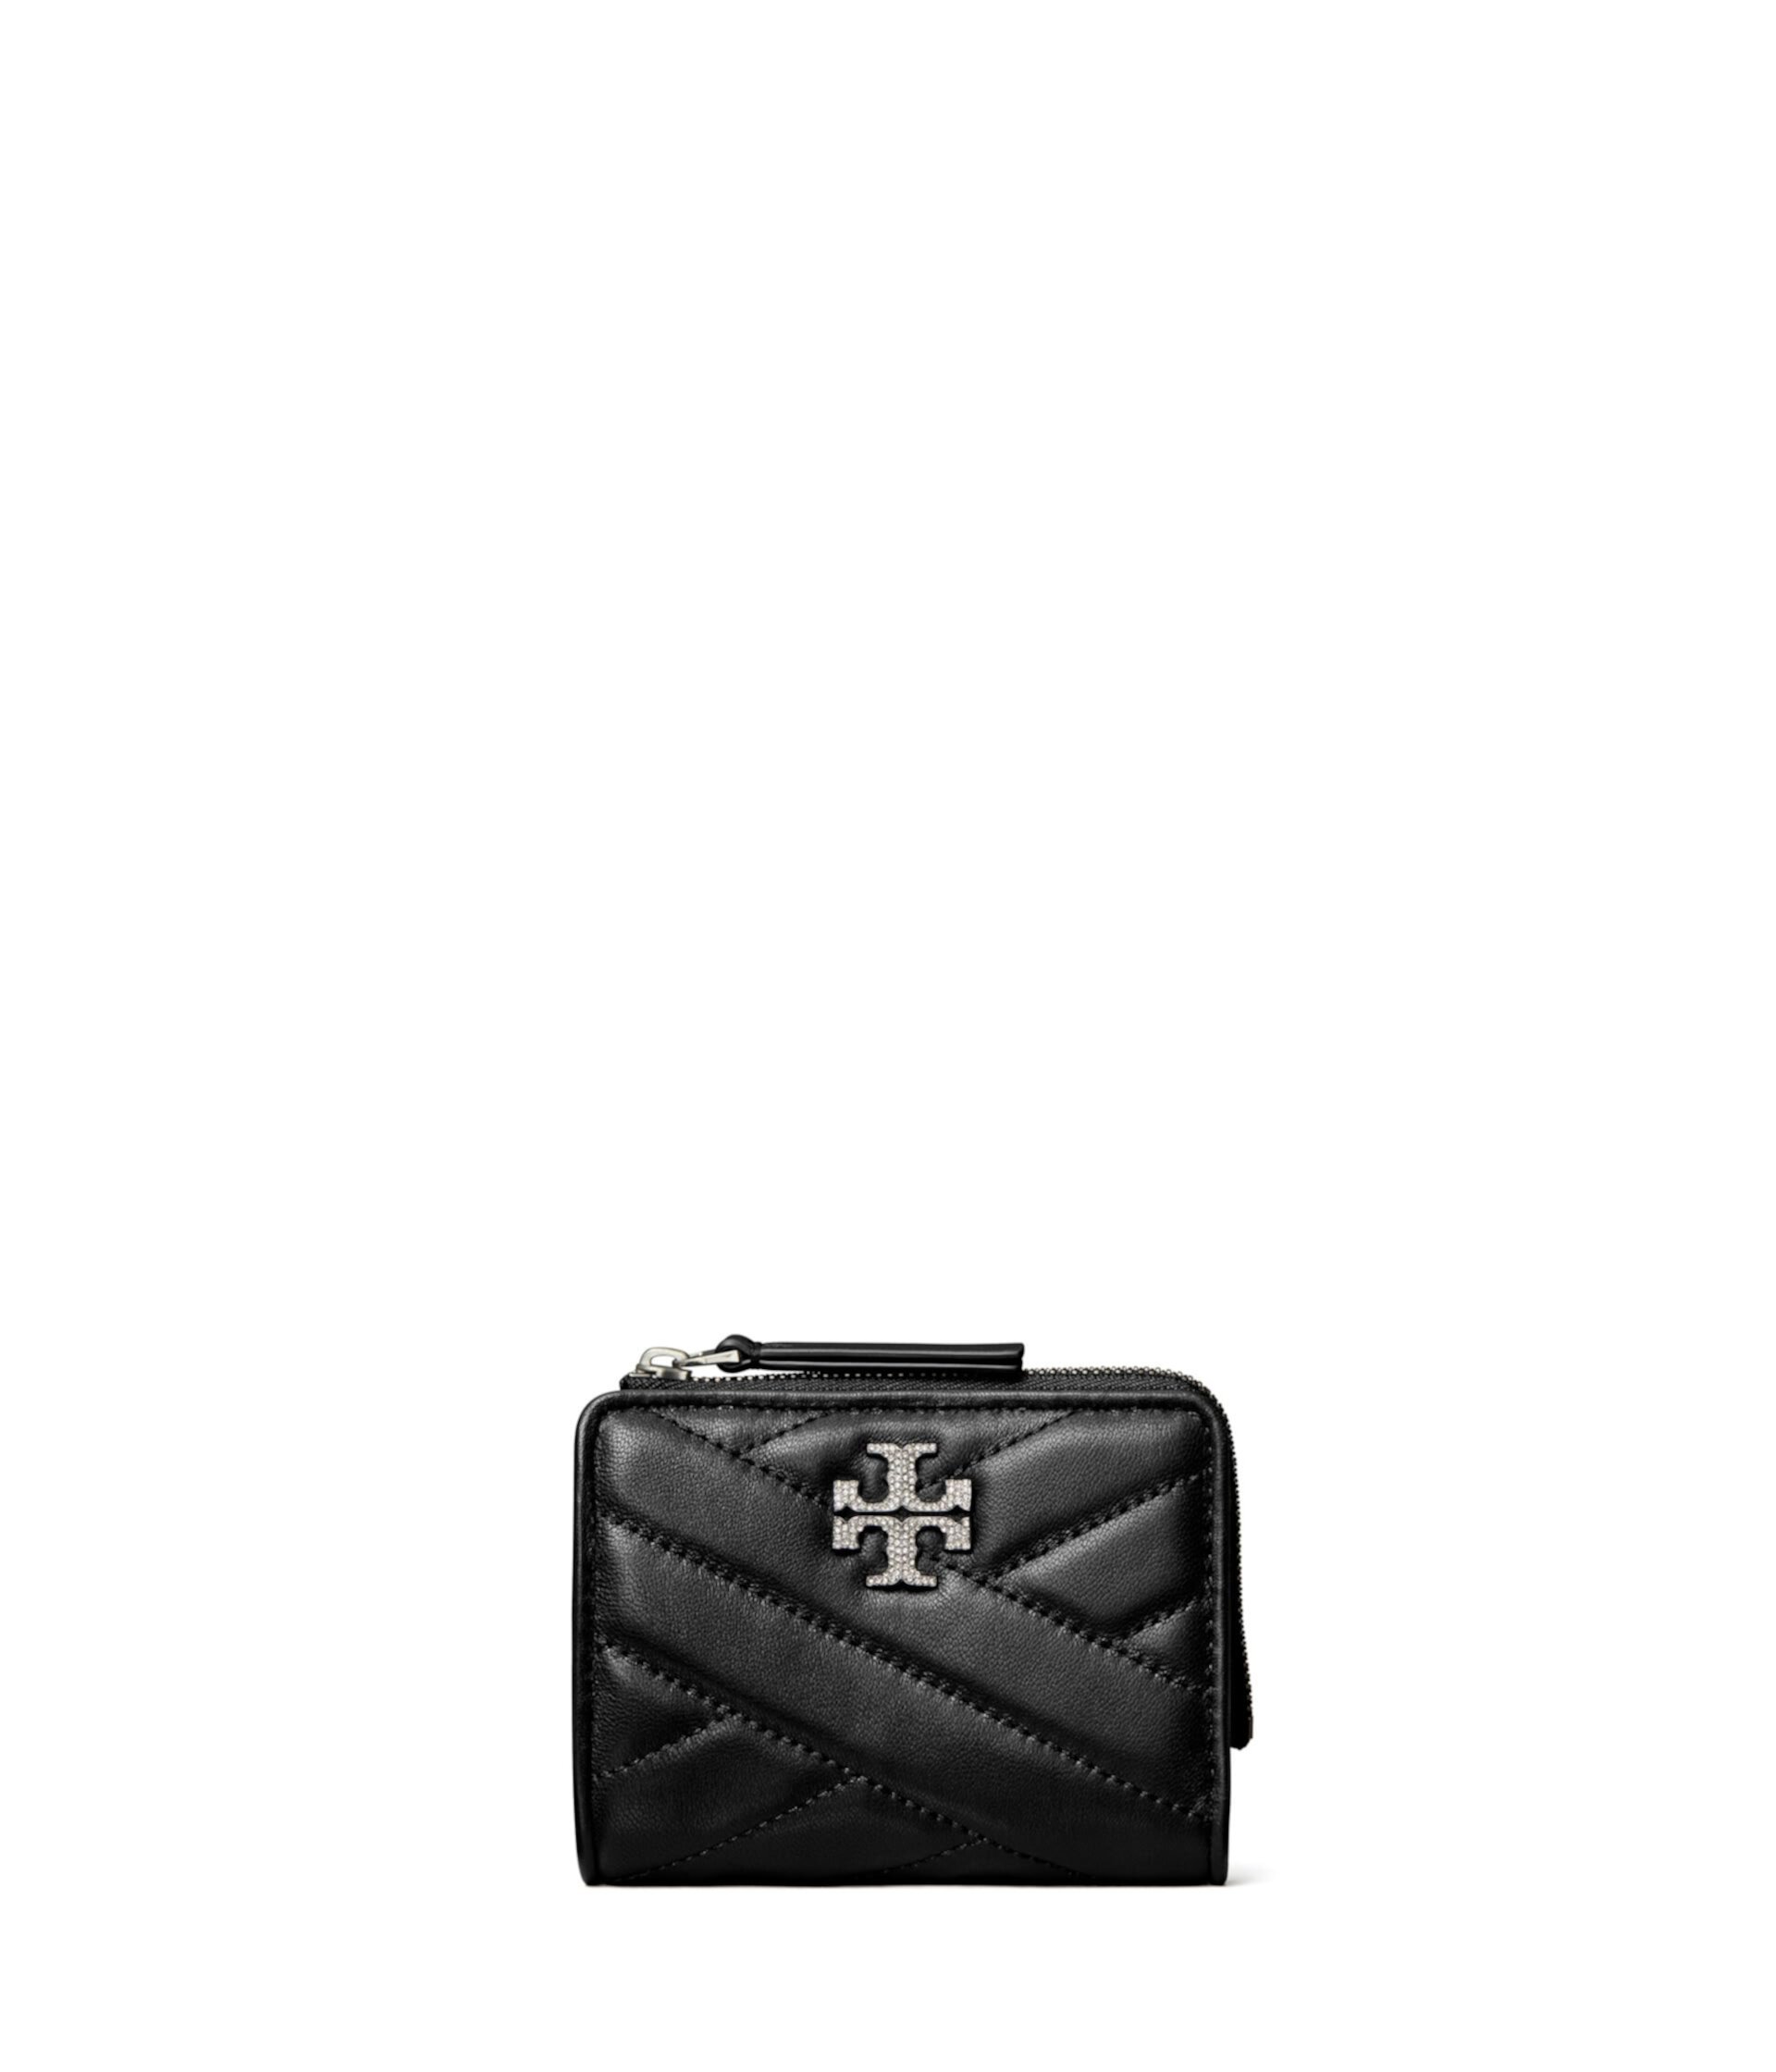 Двойной кошелек Kira Chevron Pave с логотипом Tory Burch